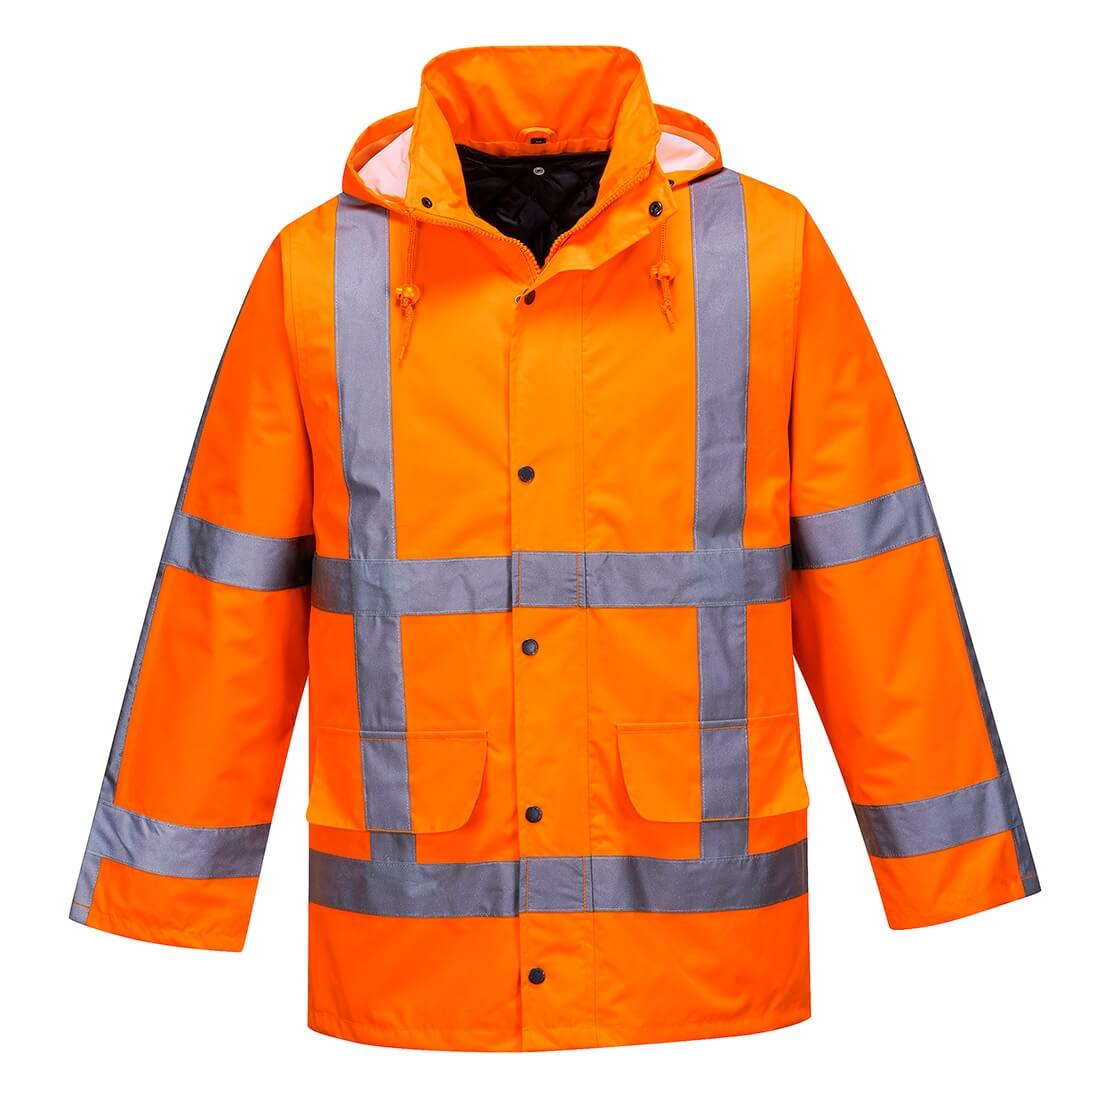 RWS Traffic Jacket - Safetywear